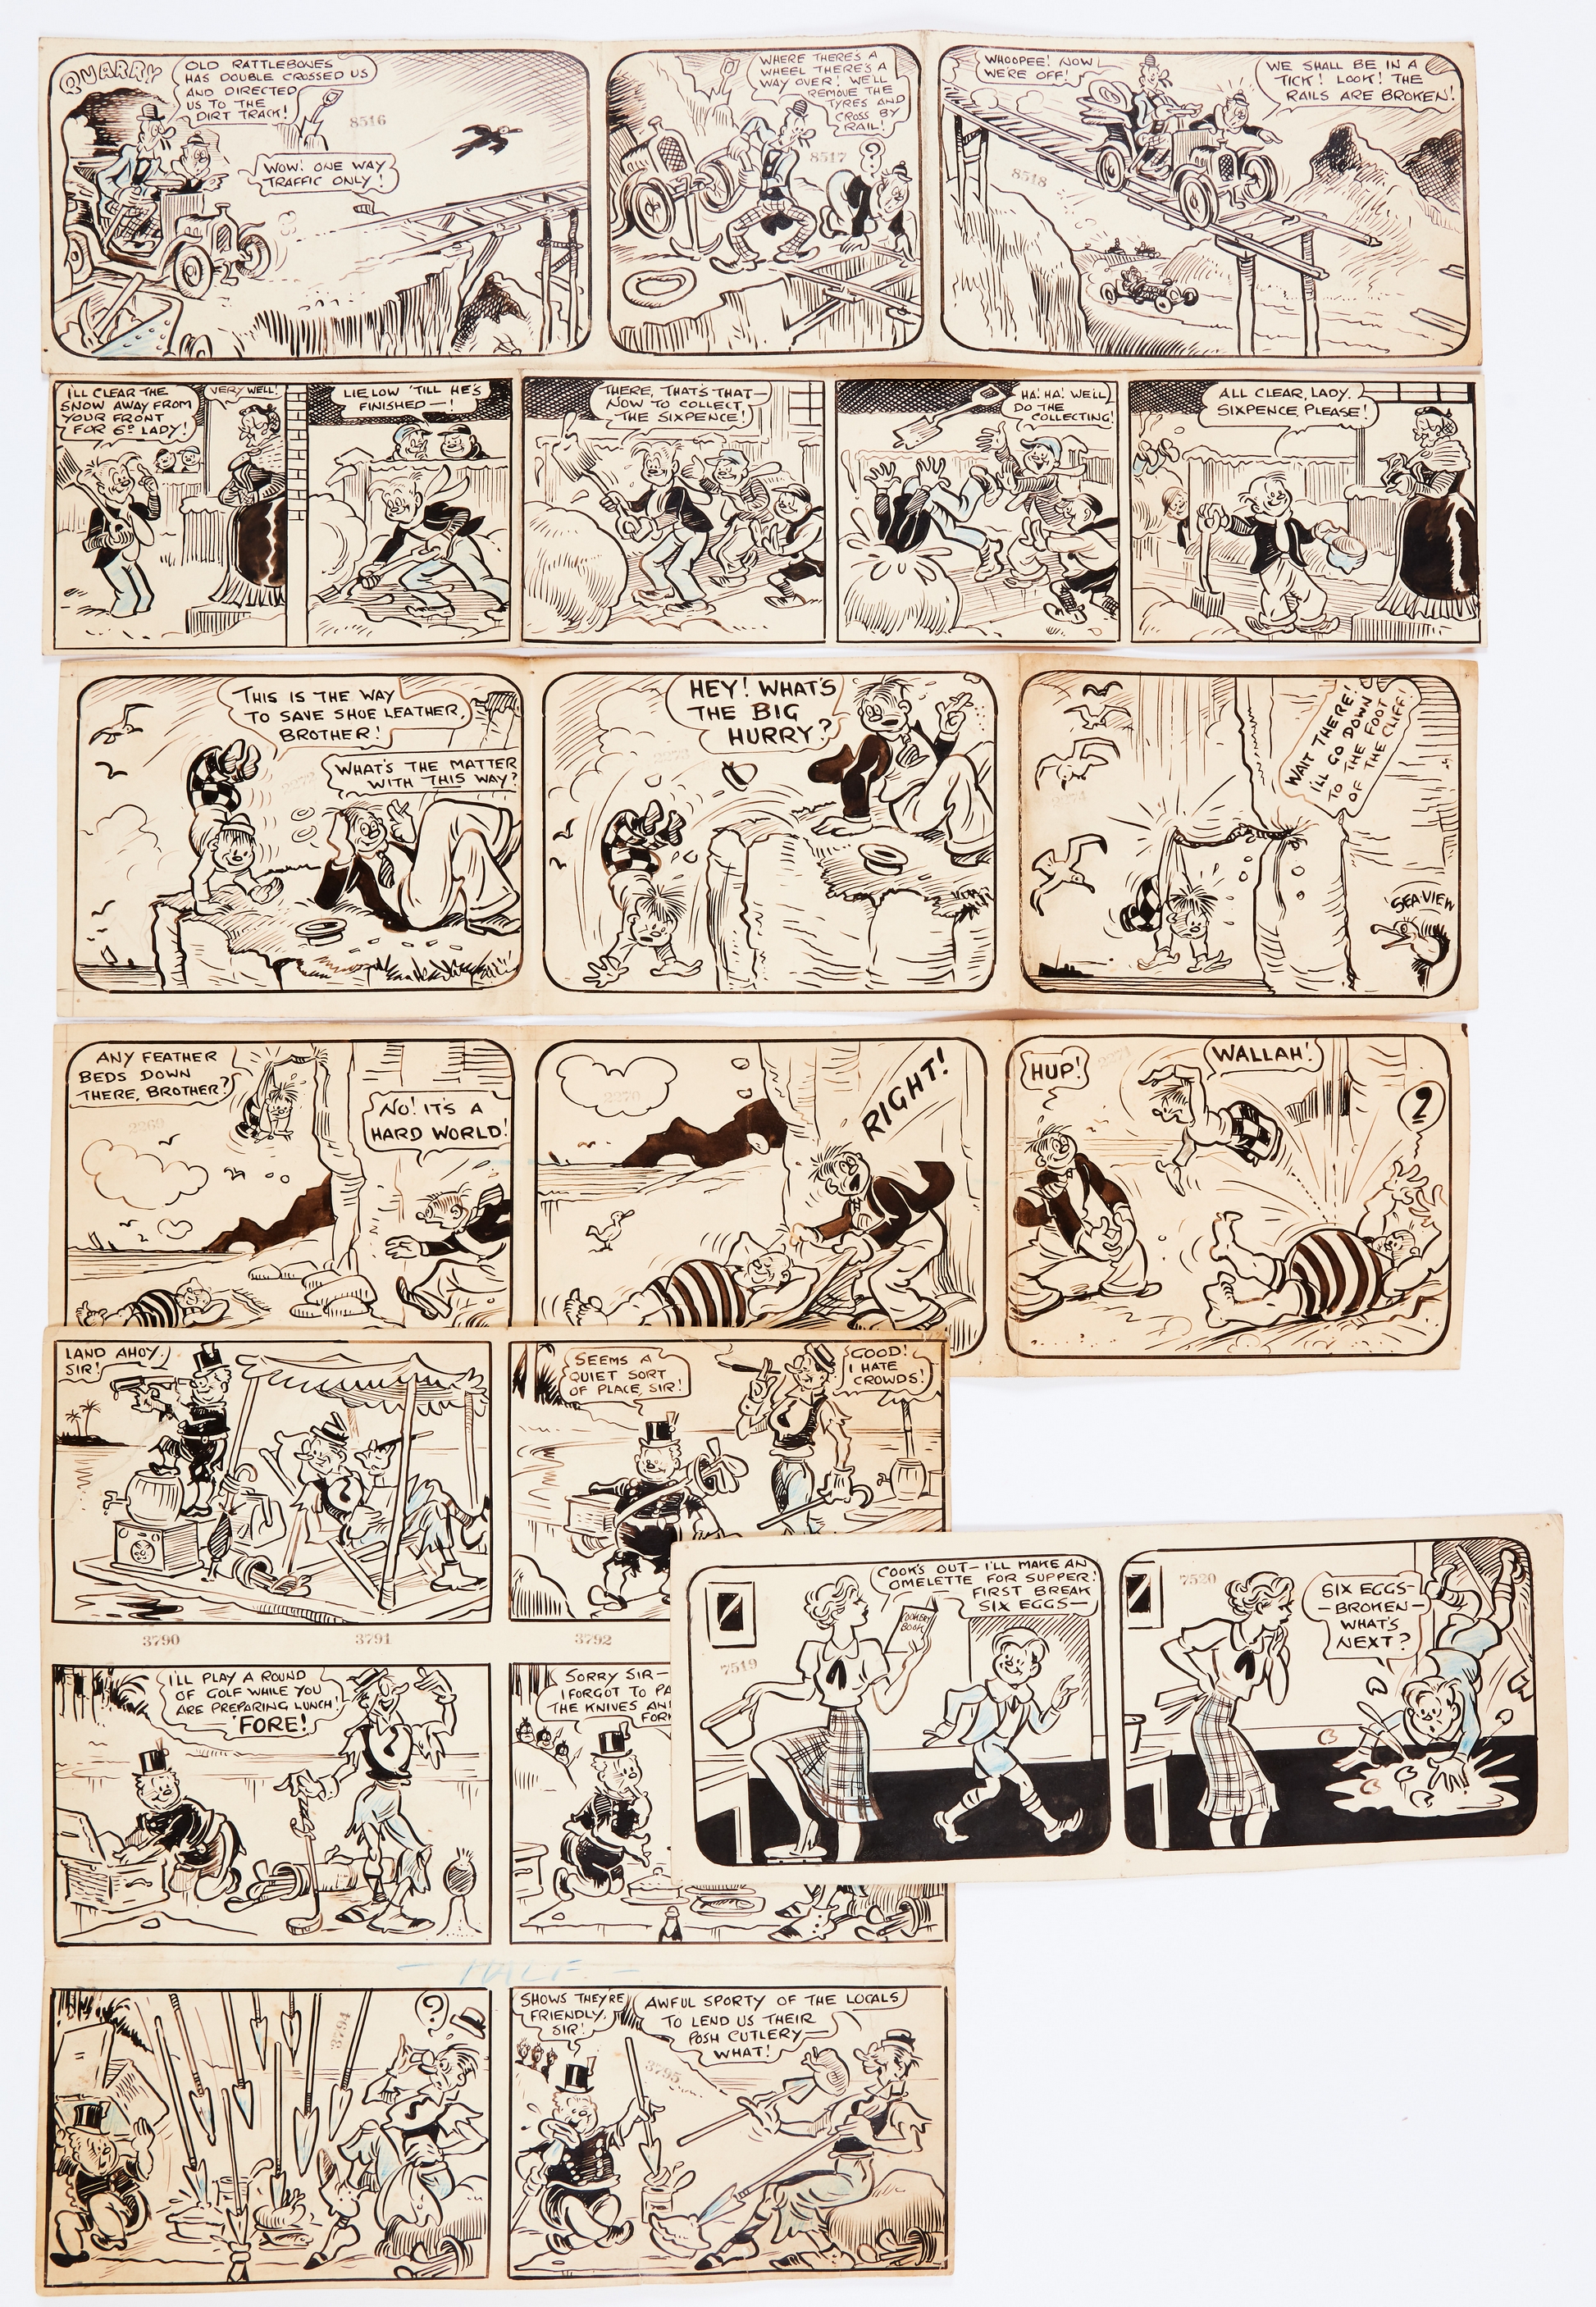 Comic Cuts, Joker, Jolly and Larks (1940s-50s) original artwork strips by A.T. 'Bertie' Brown.